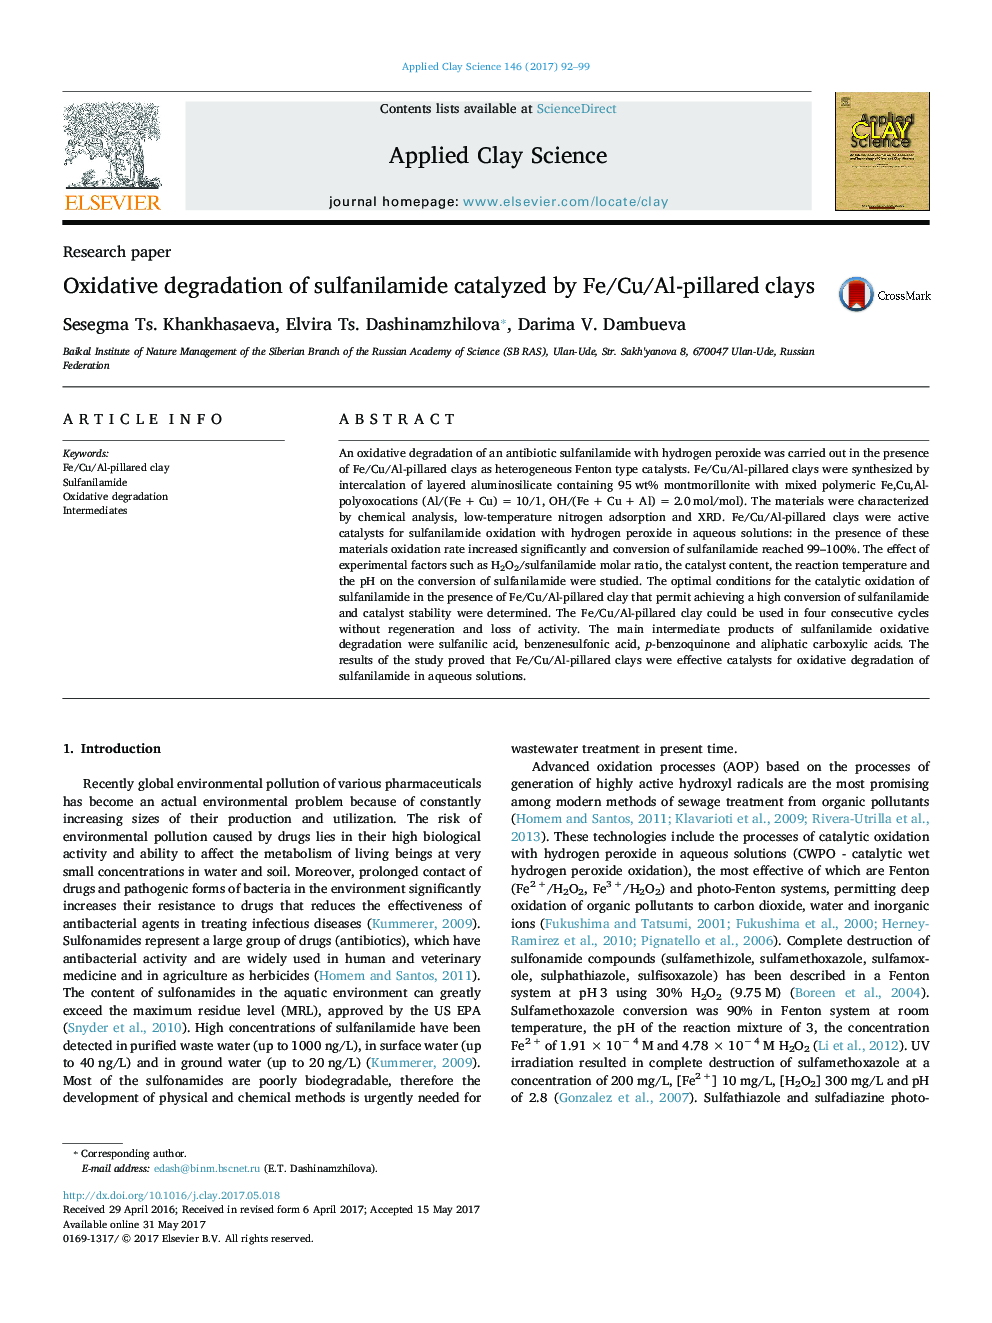 Oxidative degradation of sulfanilamide catalyzed by Fe/Cu/Al-pillared clays